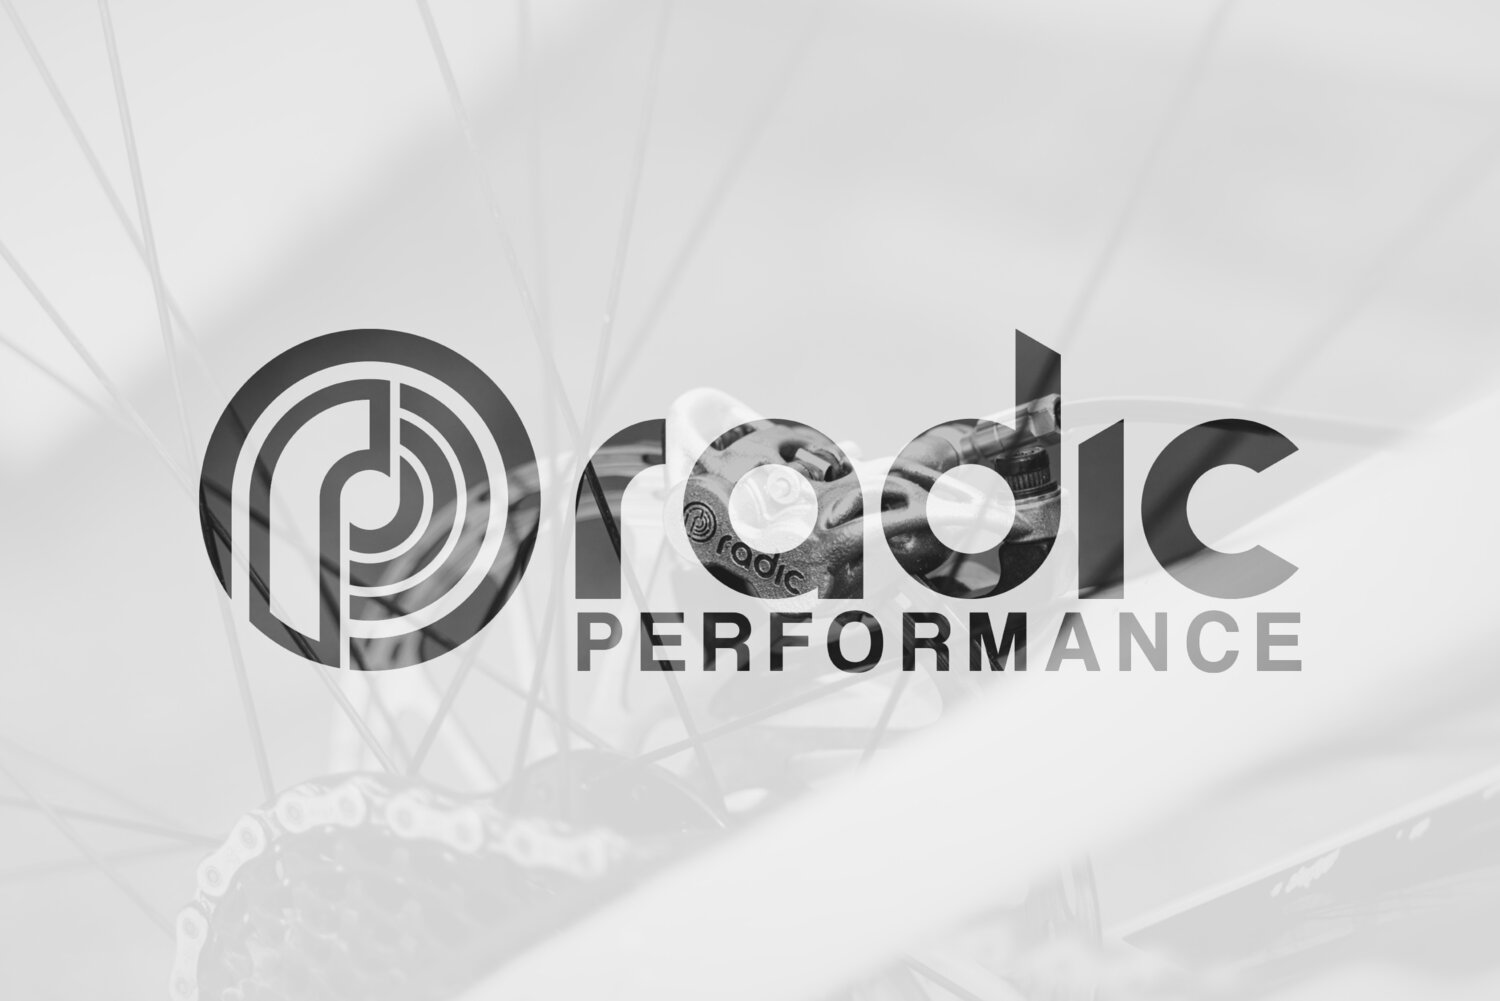 www.radicperformance.com